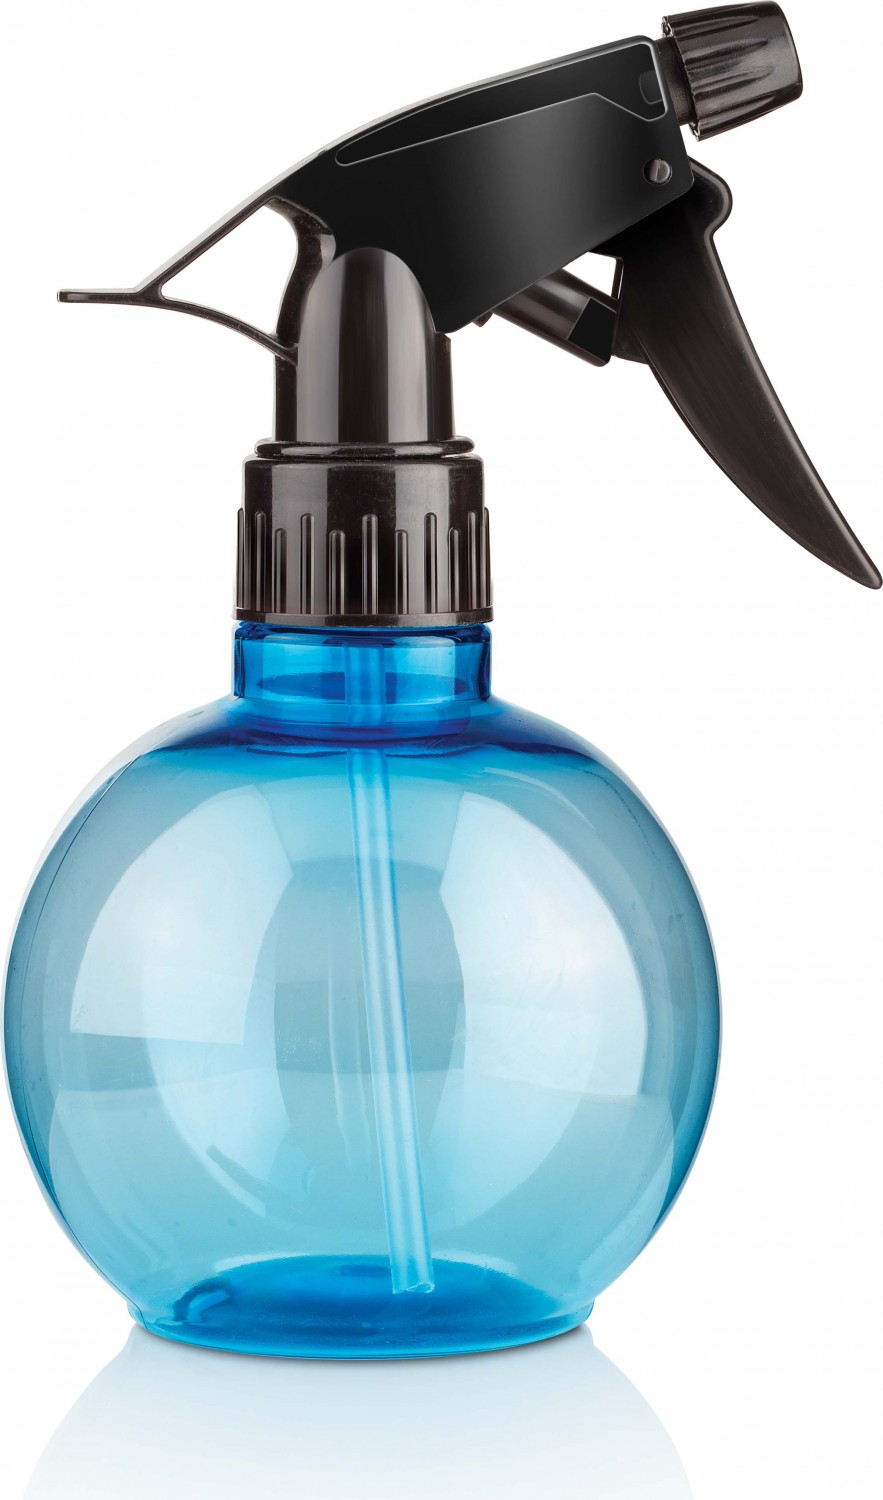  XanitaliaPro Bowl Wassersprühflasche in Blau 